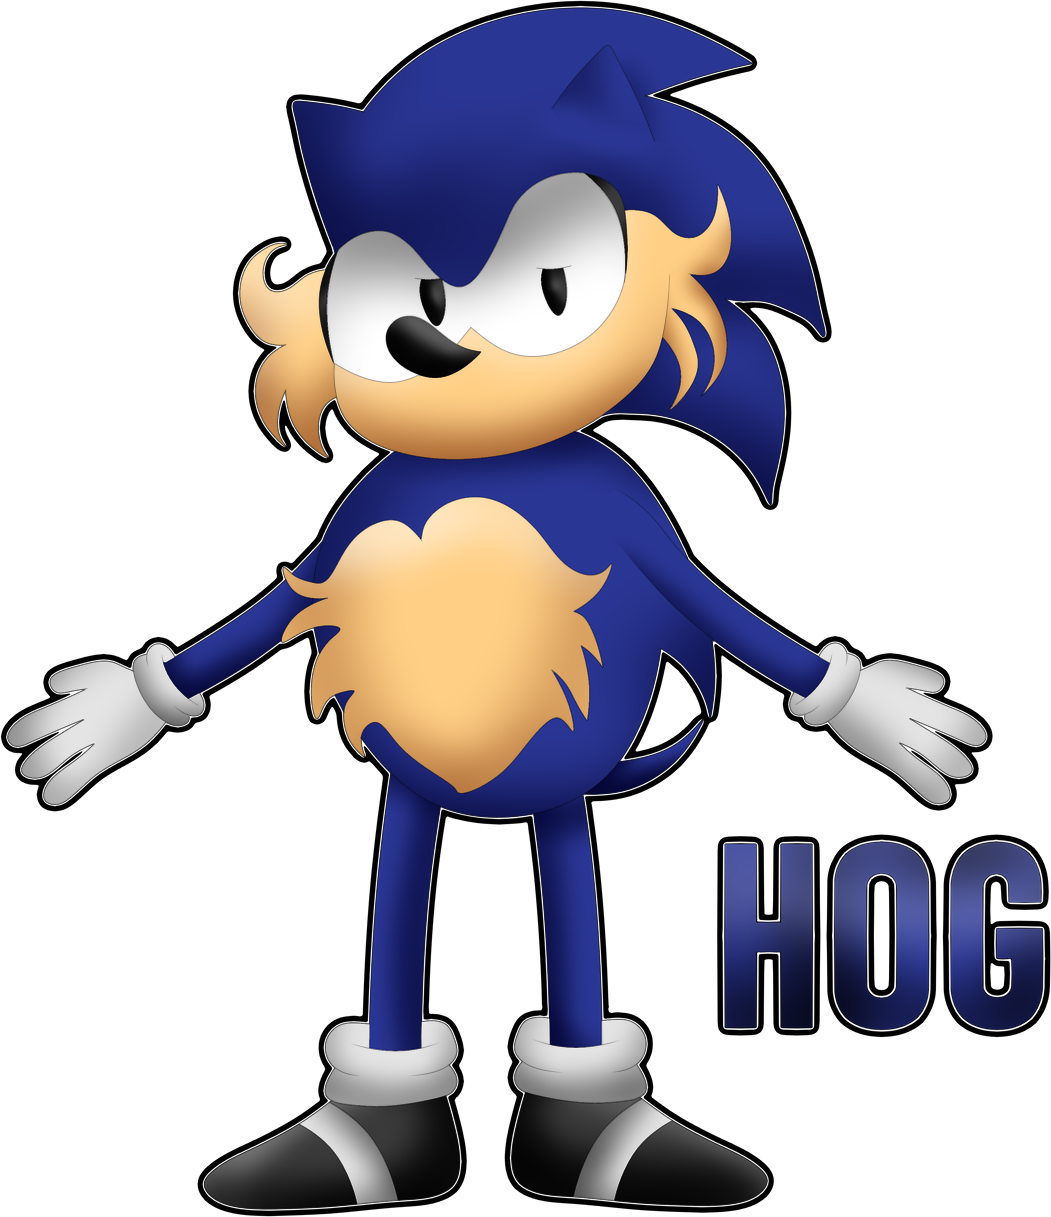 Hog (Sonic Exe Character FanArt) by Faith3231 on DeviantArt